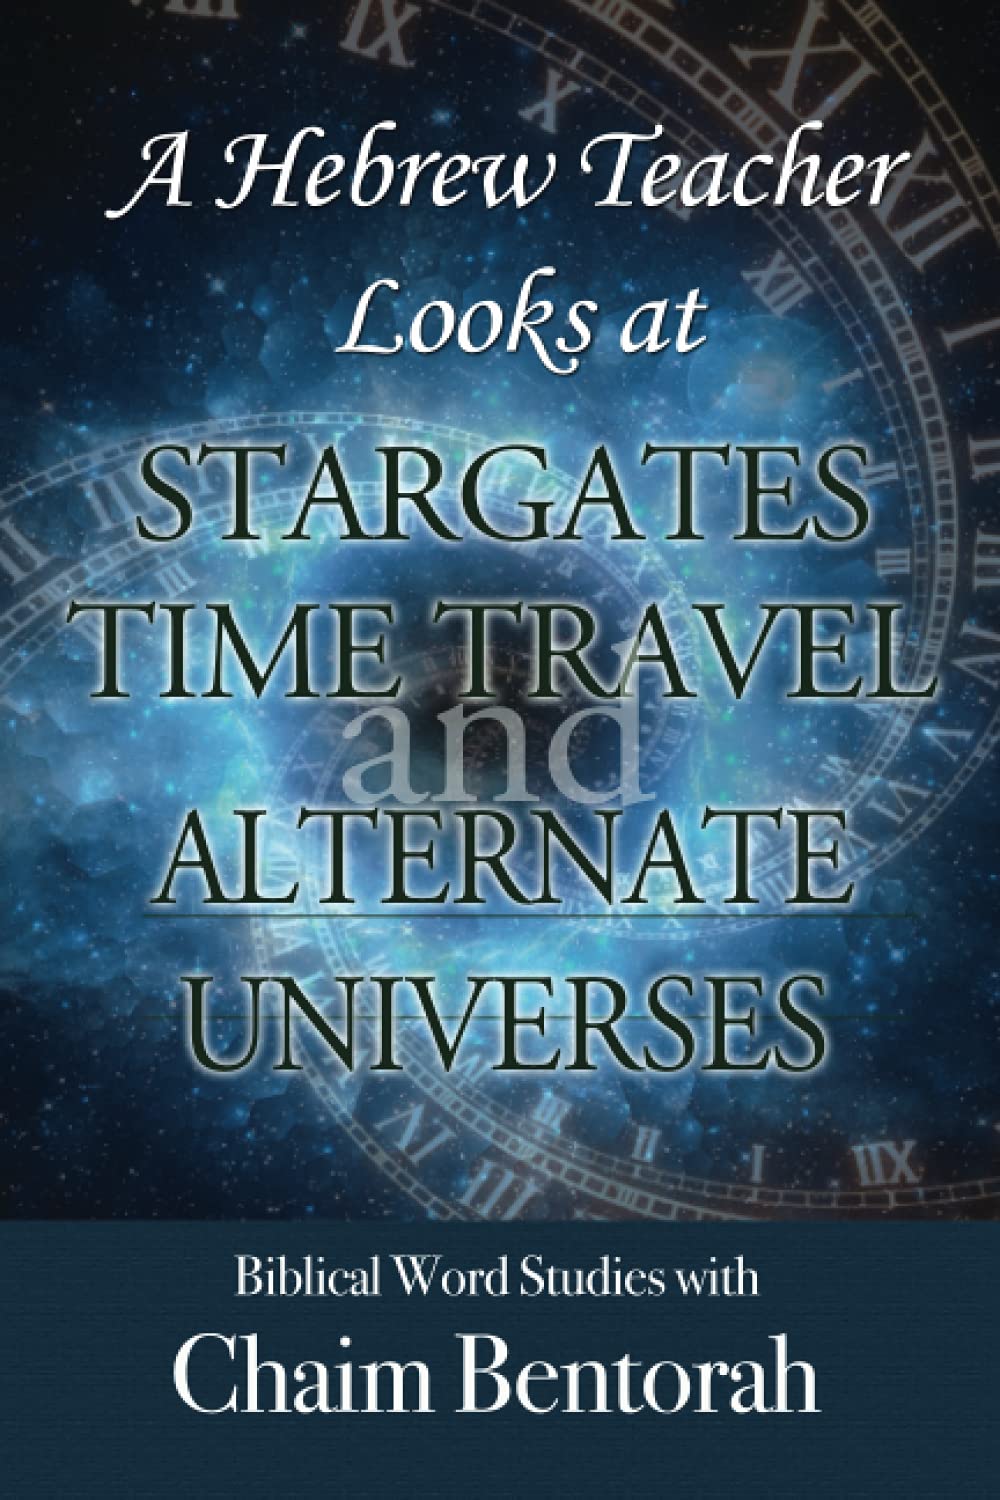 A Hebrew Teacher Looks At Stargates, Time Travel, and Alternate Universes: Biblical Word Studies With Chaim Bentorah (Paperback)